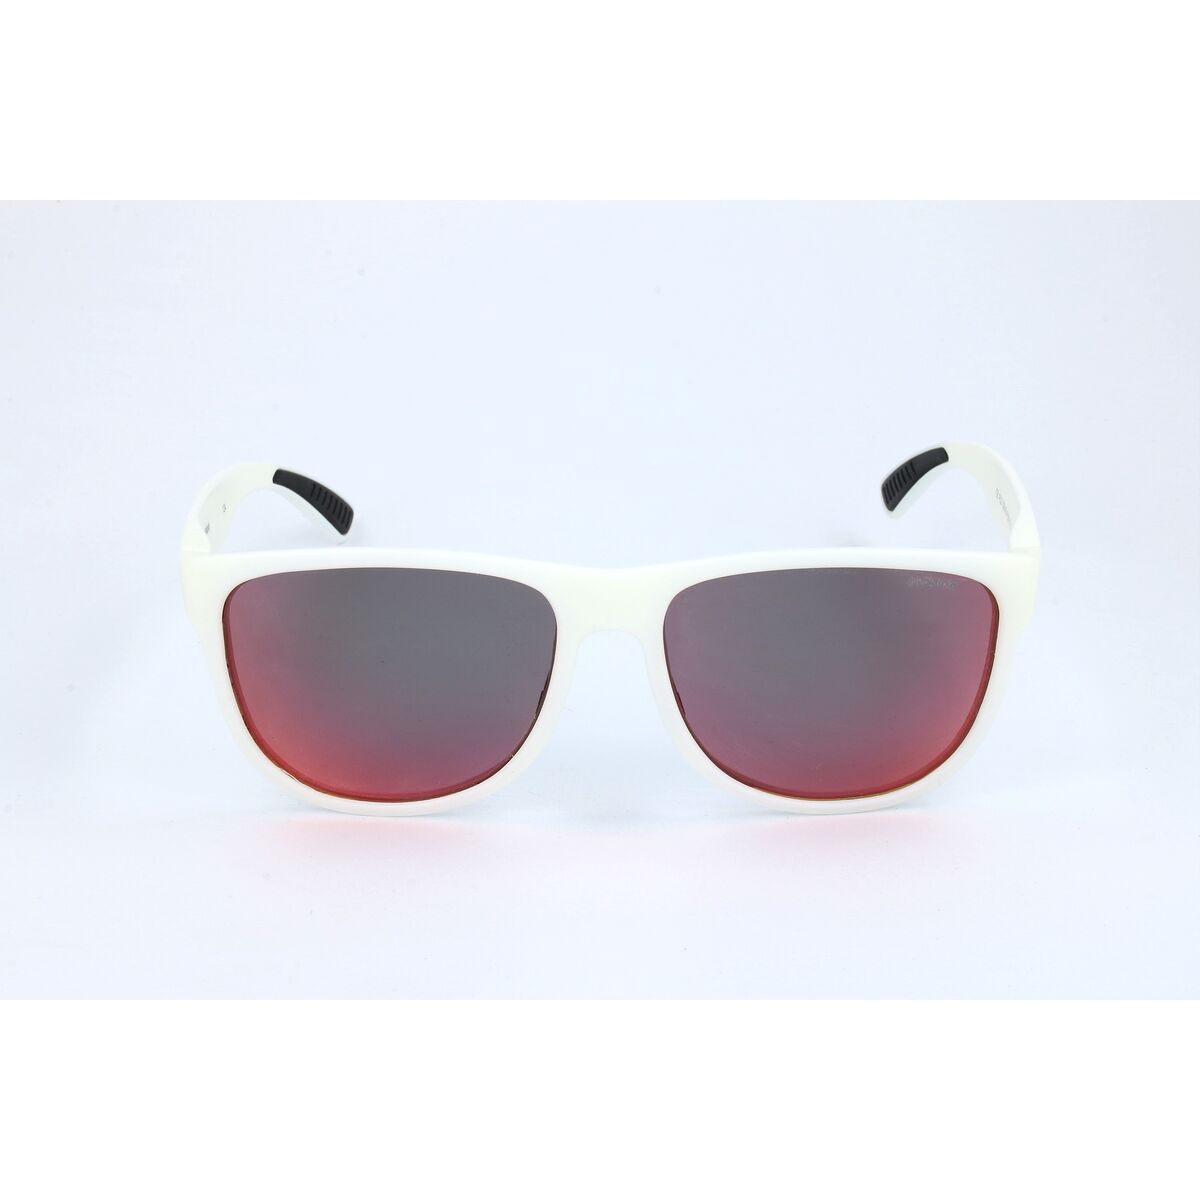 Men's Sunglasses Polaroid PLD3004-S-PLM